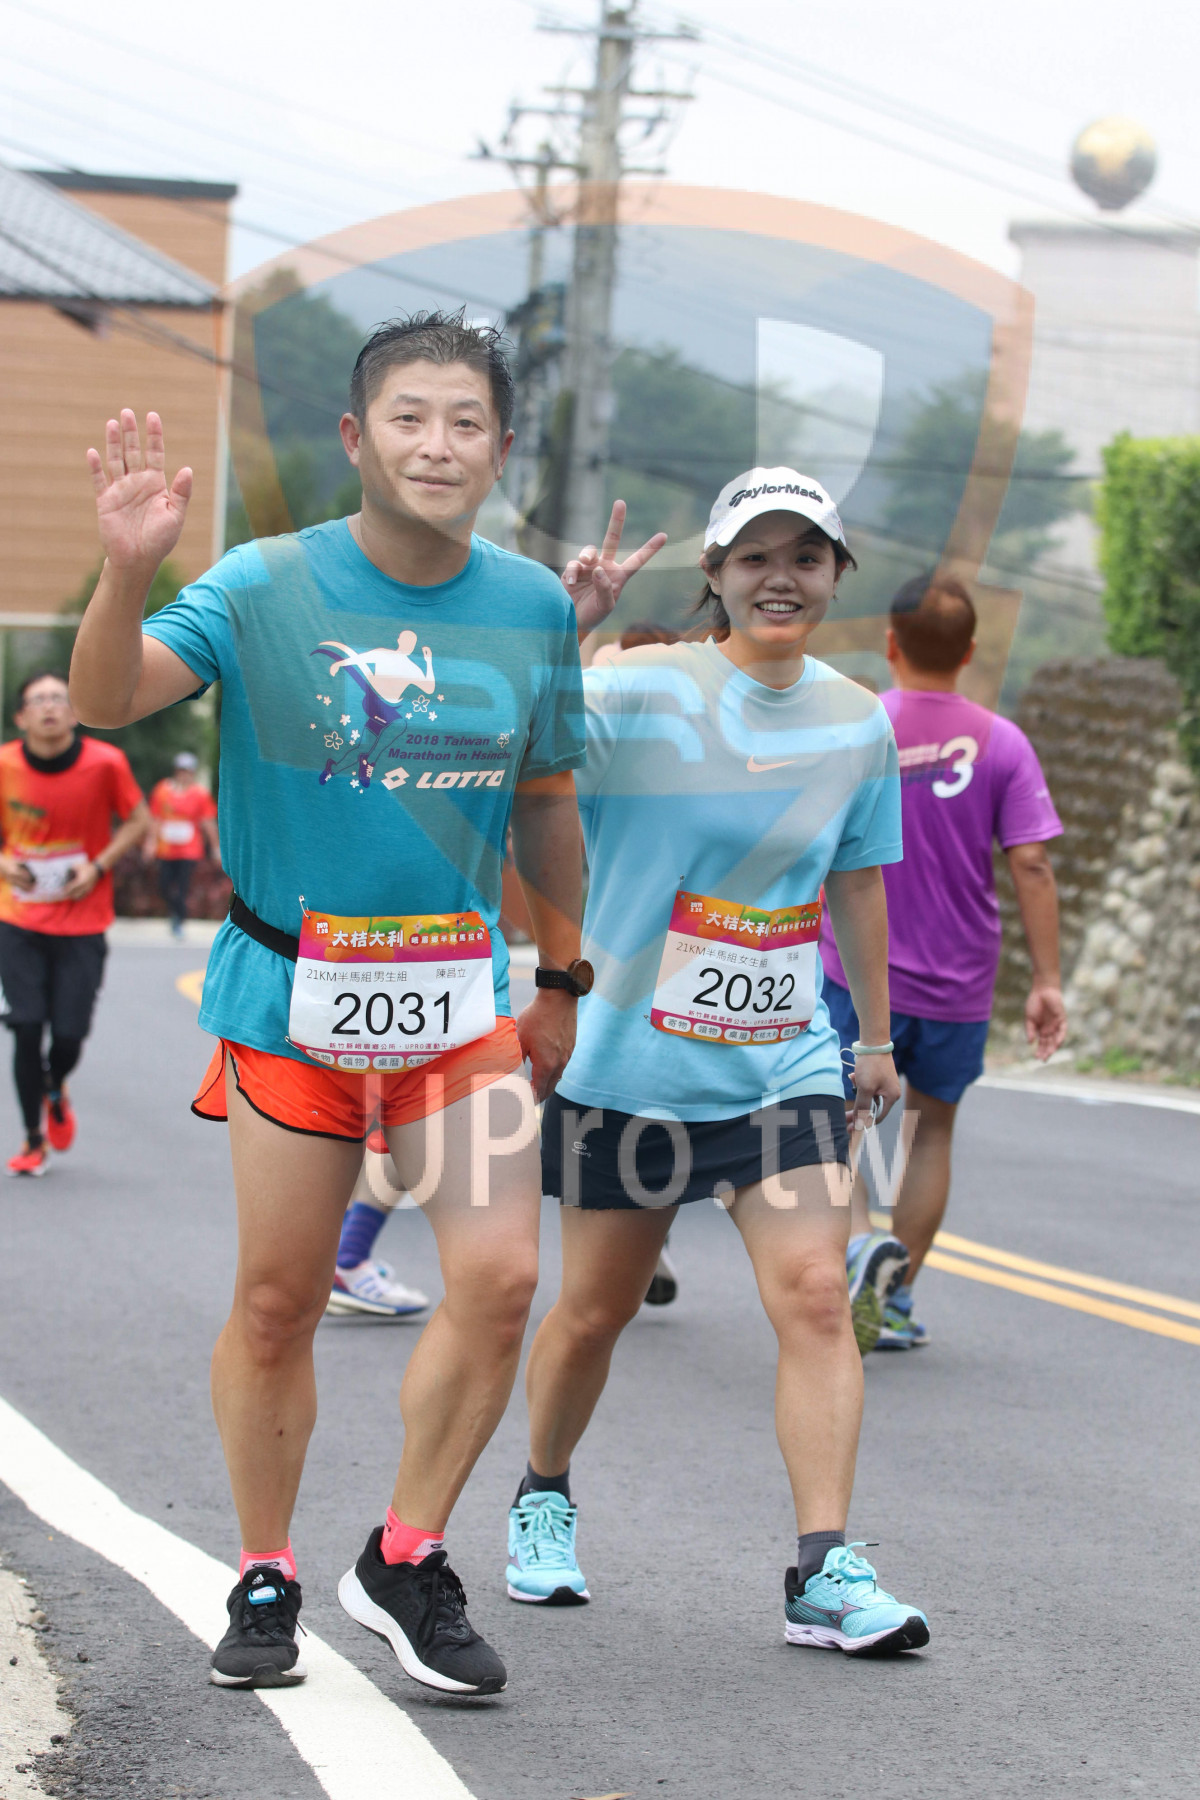 3,2018 Teiwan,Marathon in,;,2032,2031|